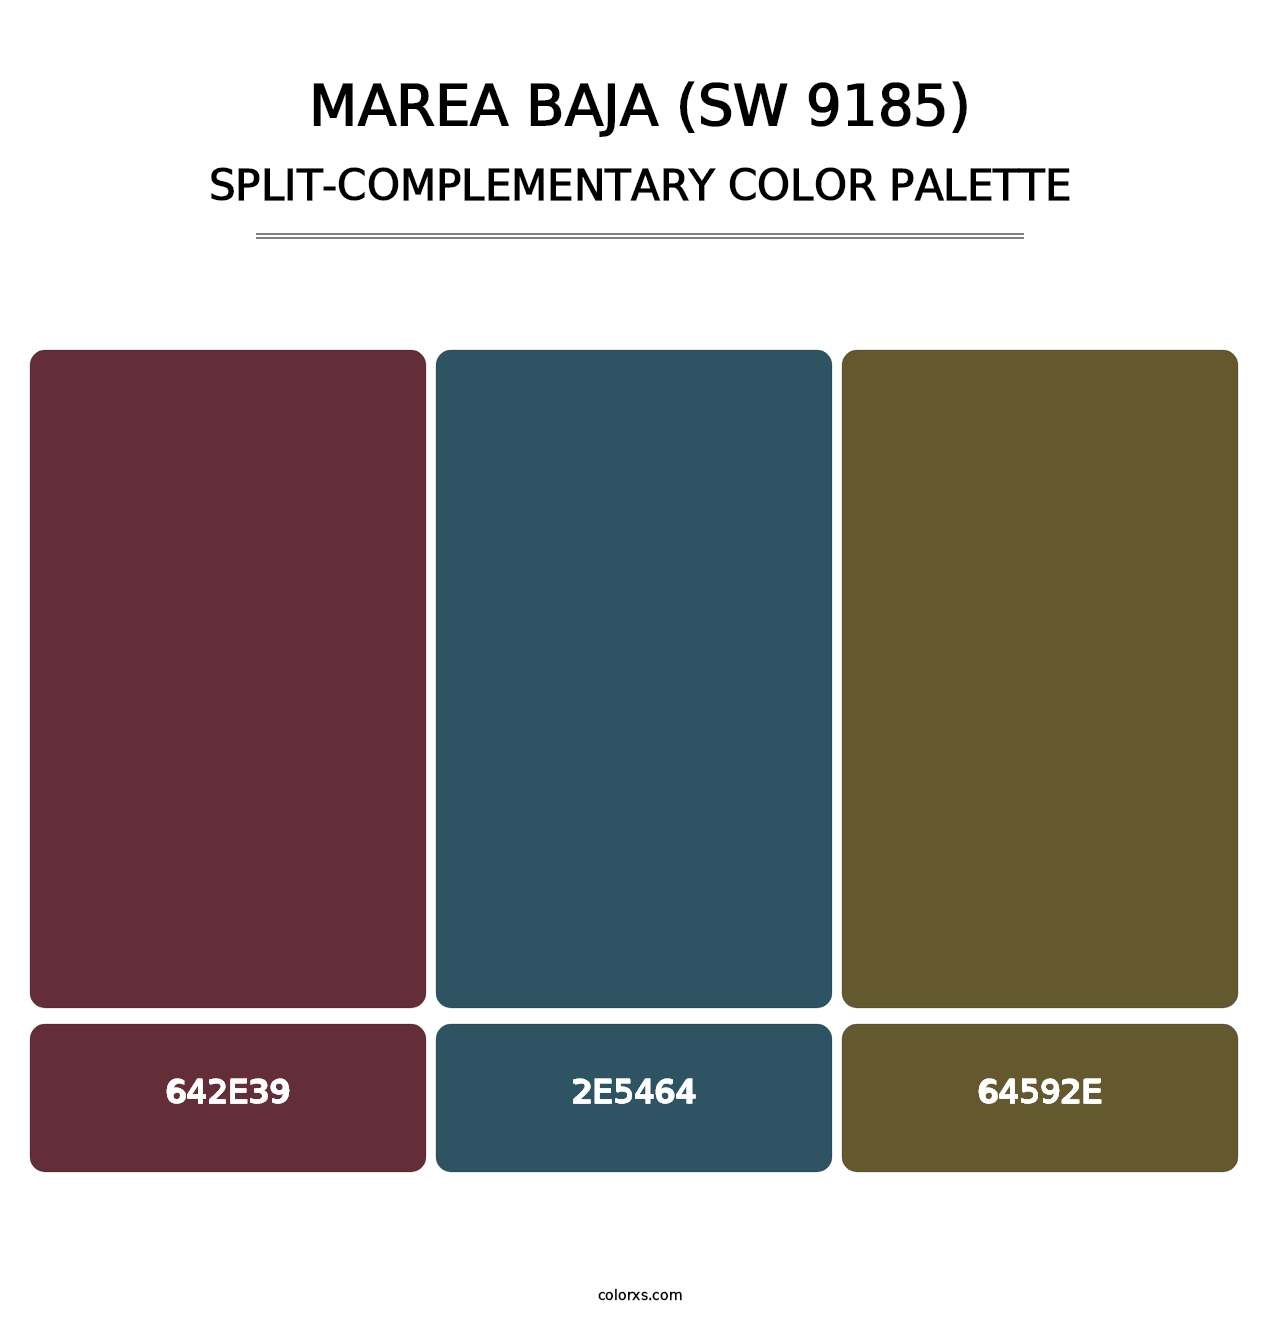 Marea Baja (SW 9185) - Split-Complementary Color Palette